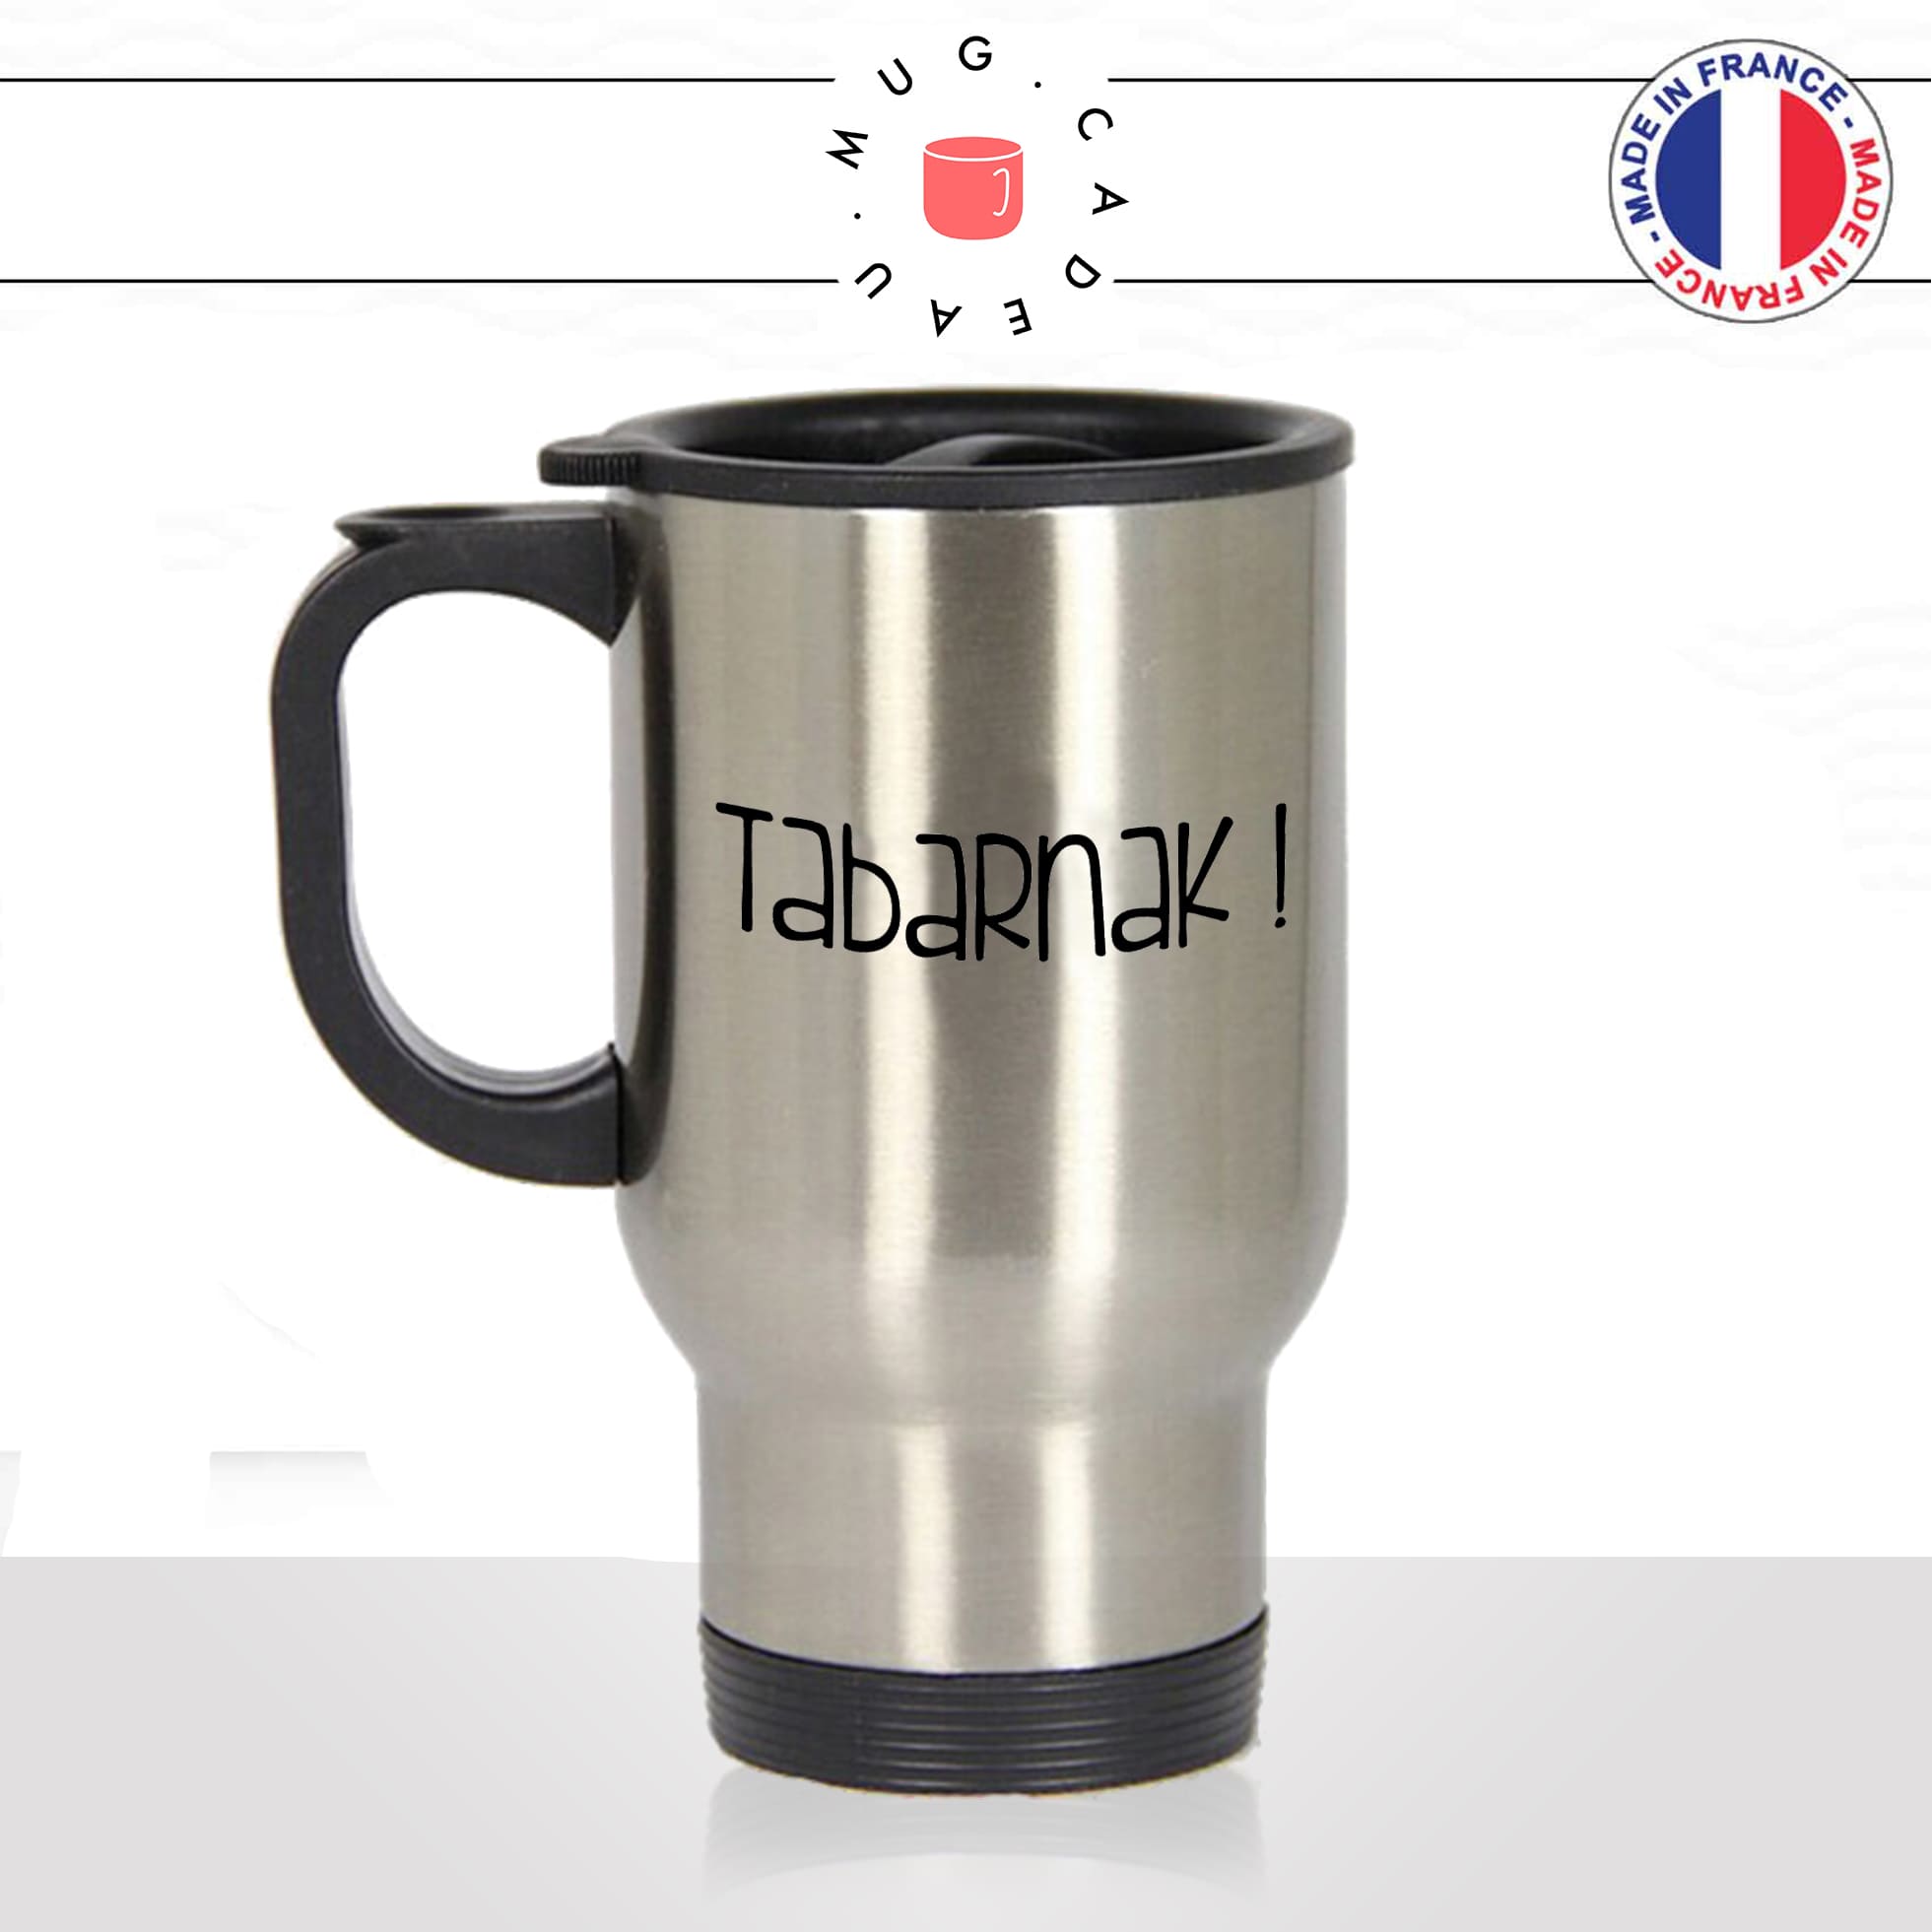 mug-tasse-thermos-isotherme-tabarnak-tabernacle-quebec-canada-homme-femme-putin-humour-fun-cool-idée-cadeau-original-personnalisé